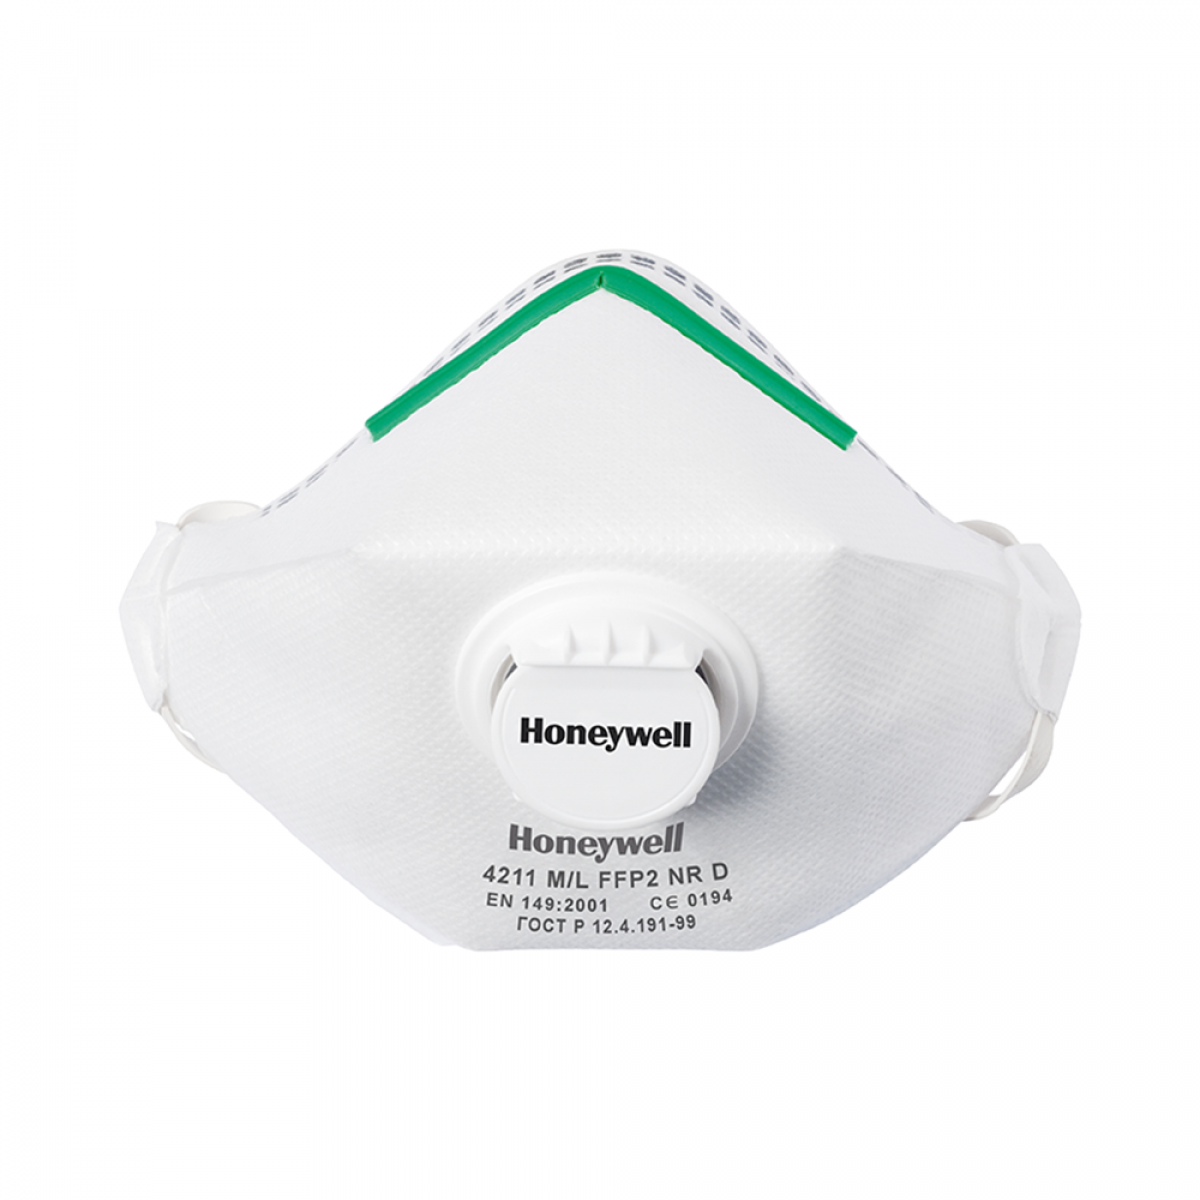 Honeywell Premium Series 4000 Single Use Mask 4211 (1005614)